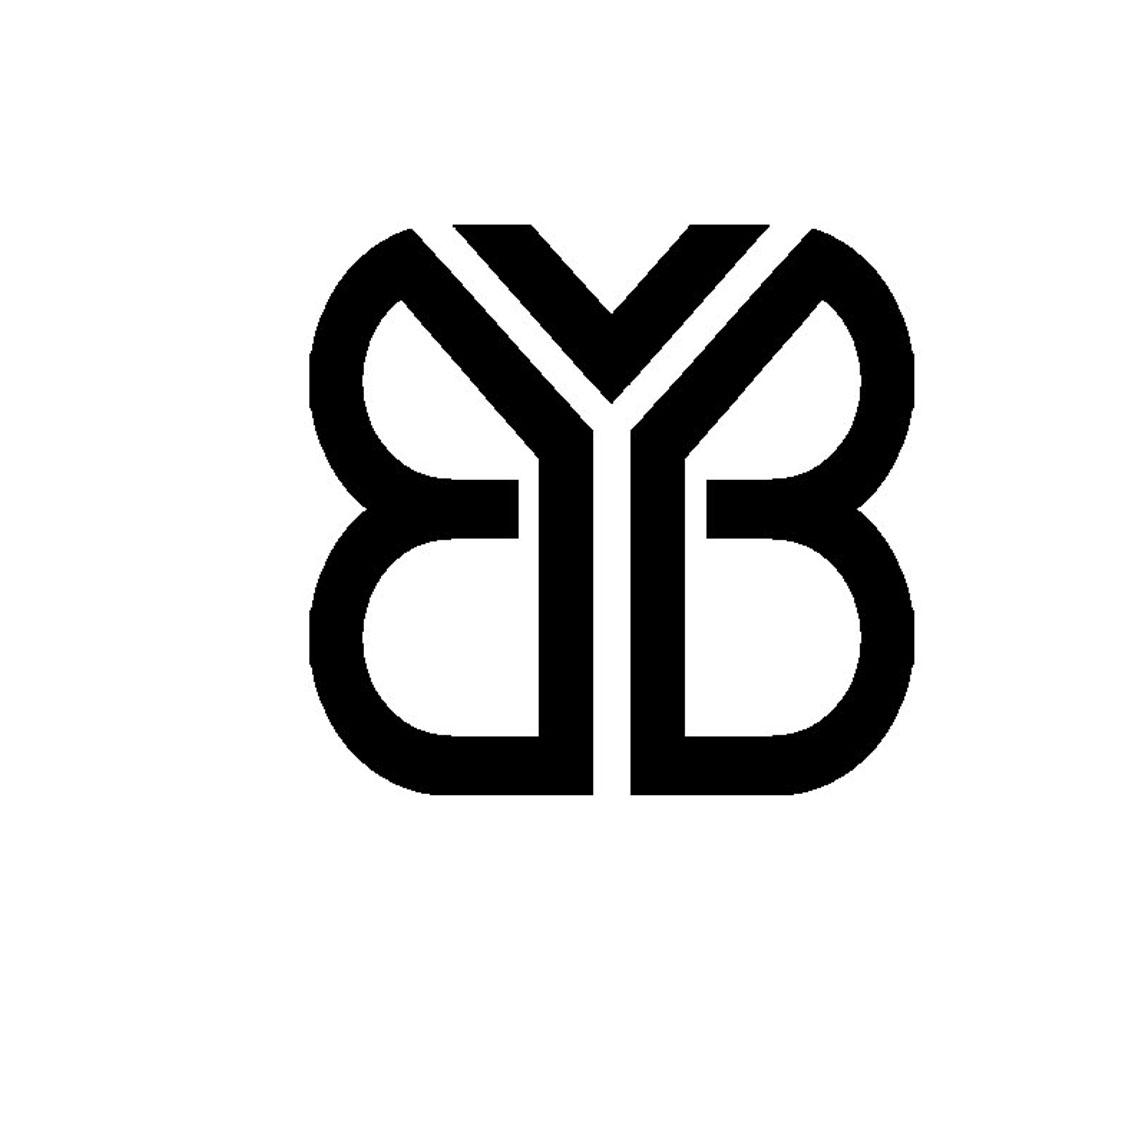 by字母组成的logo图片